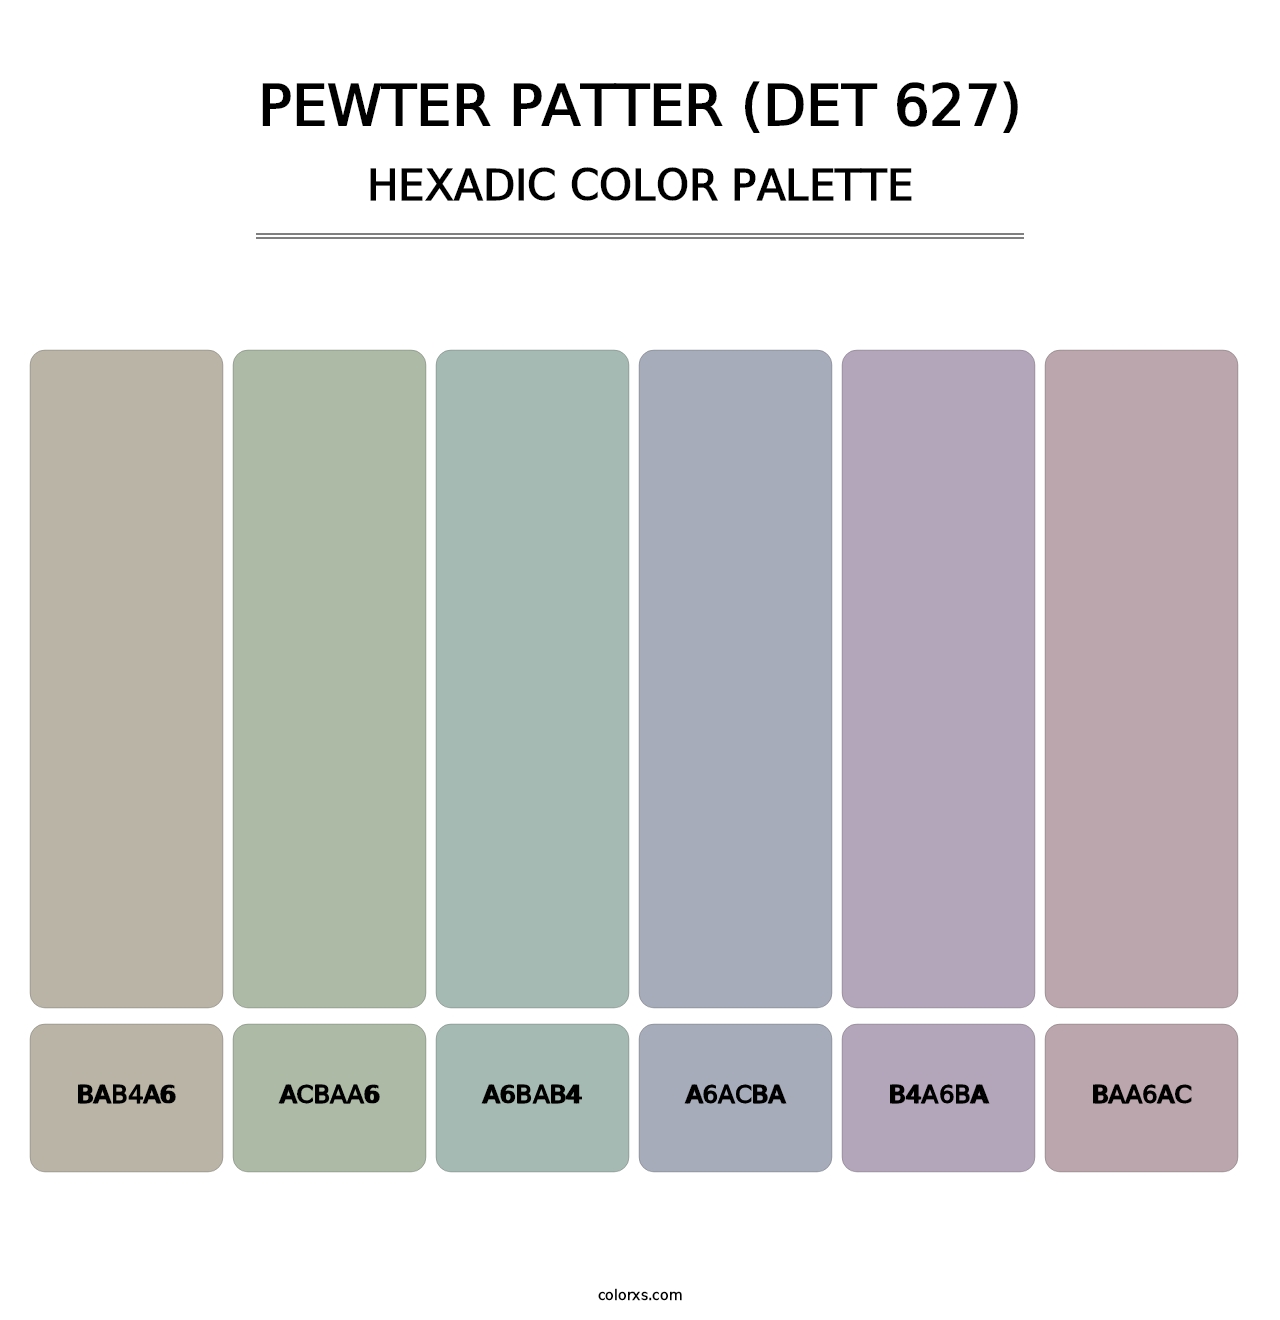 Pewter Patter (DET 627) - Hexadic Color Palette